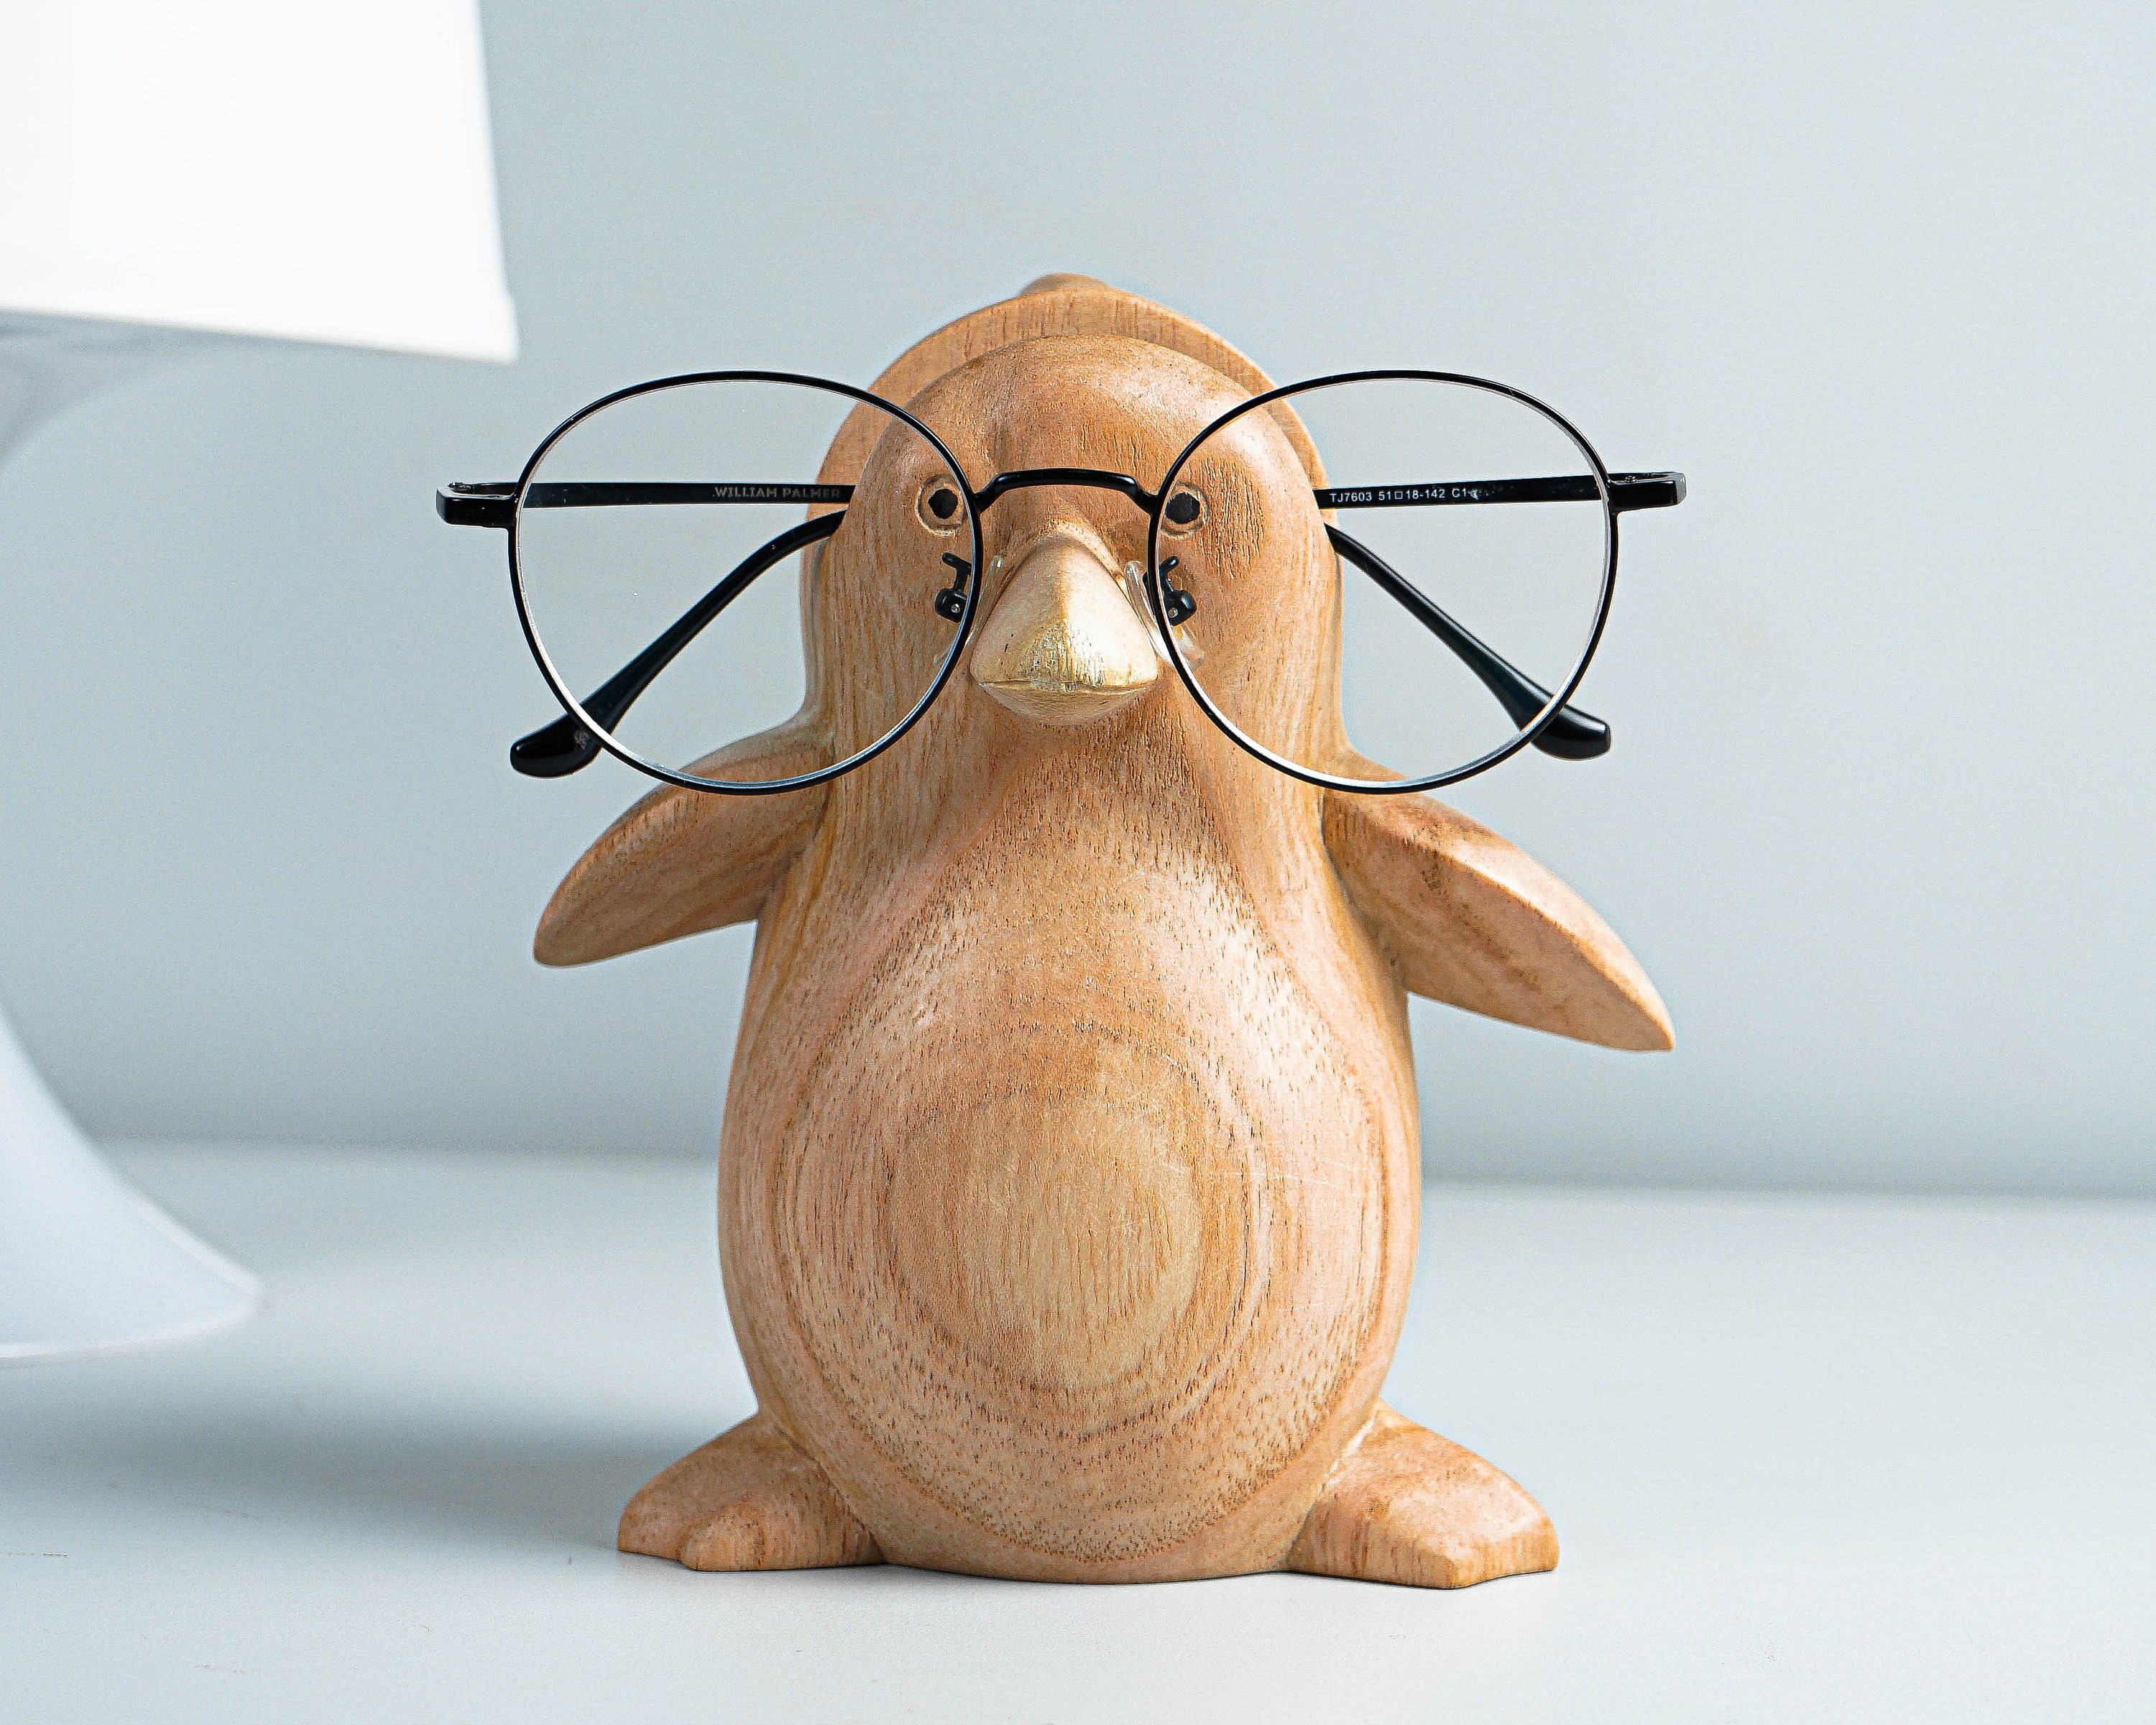  YGAOR Glasses Holder Stand Animal Wooden Eyeglass